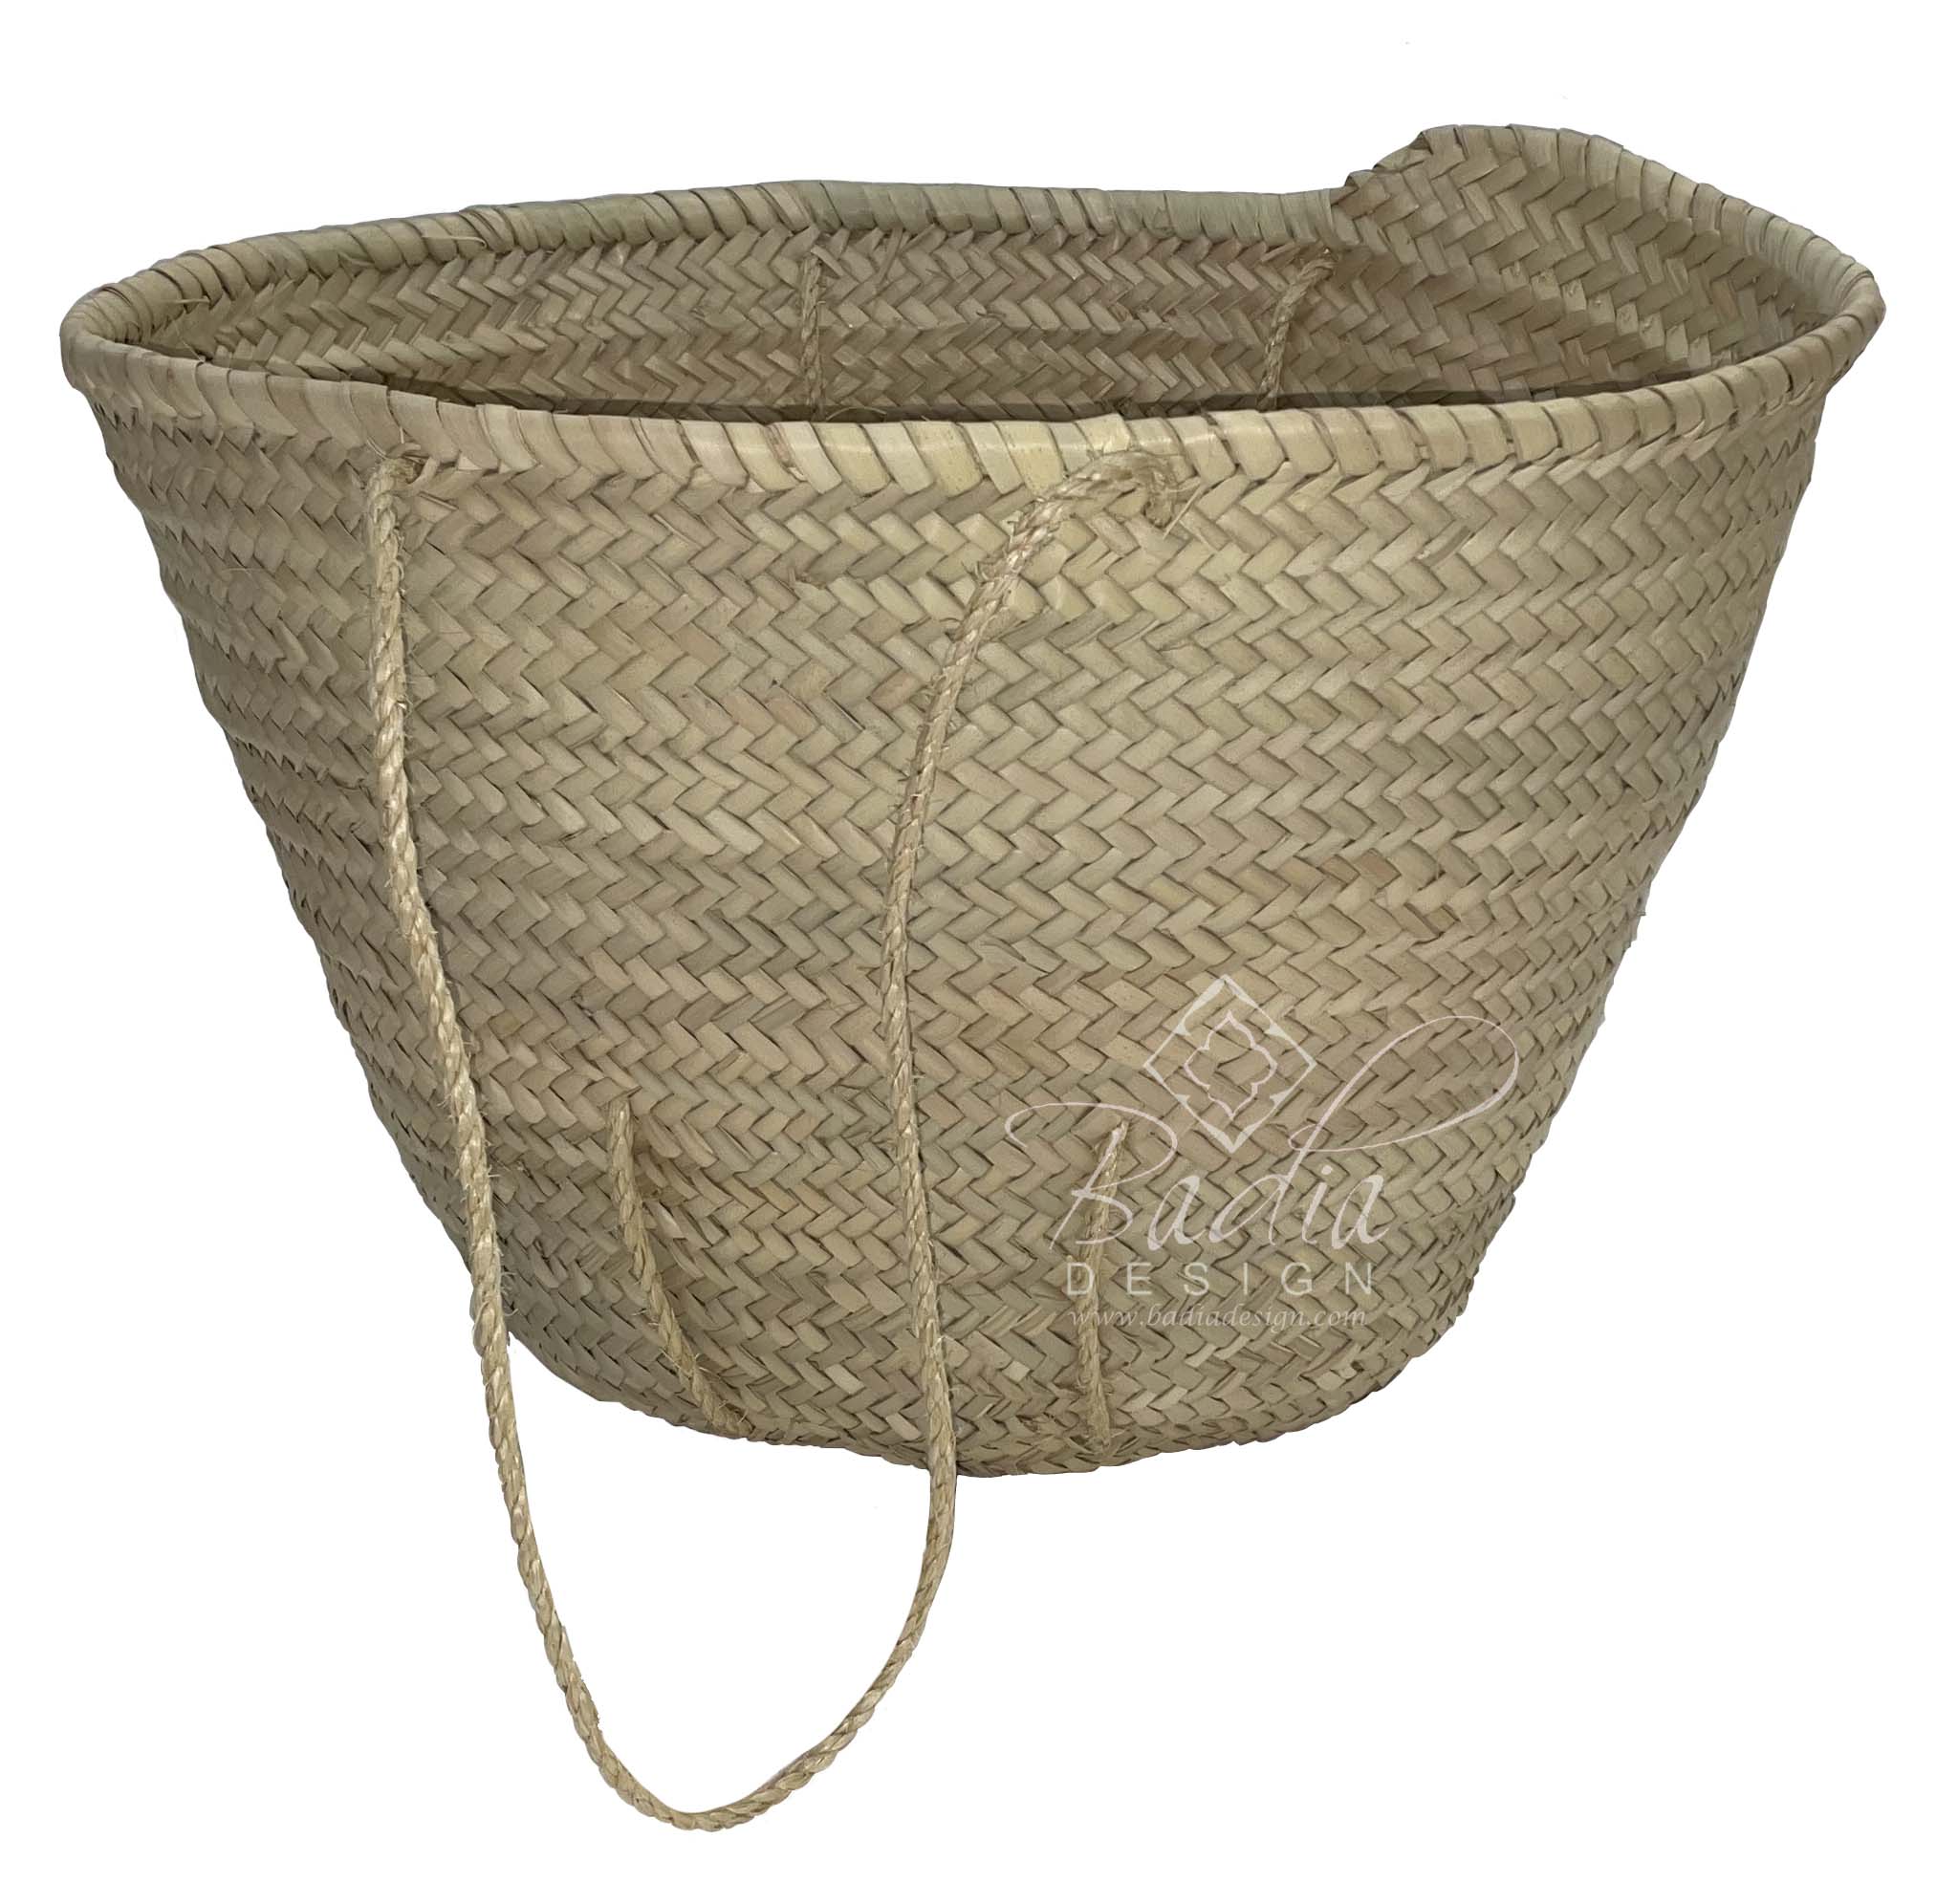 moroccan-natural-color-handwoven-straw-handbag-hb016-1.jpg